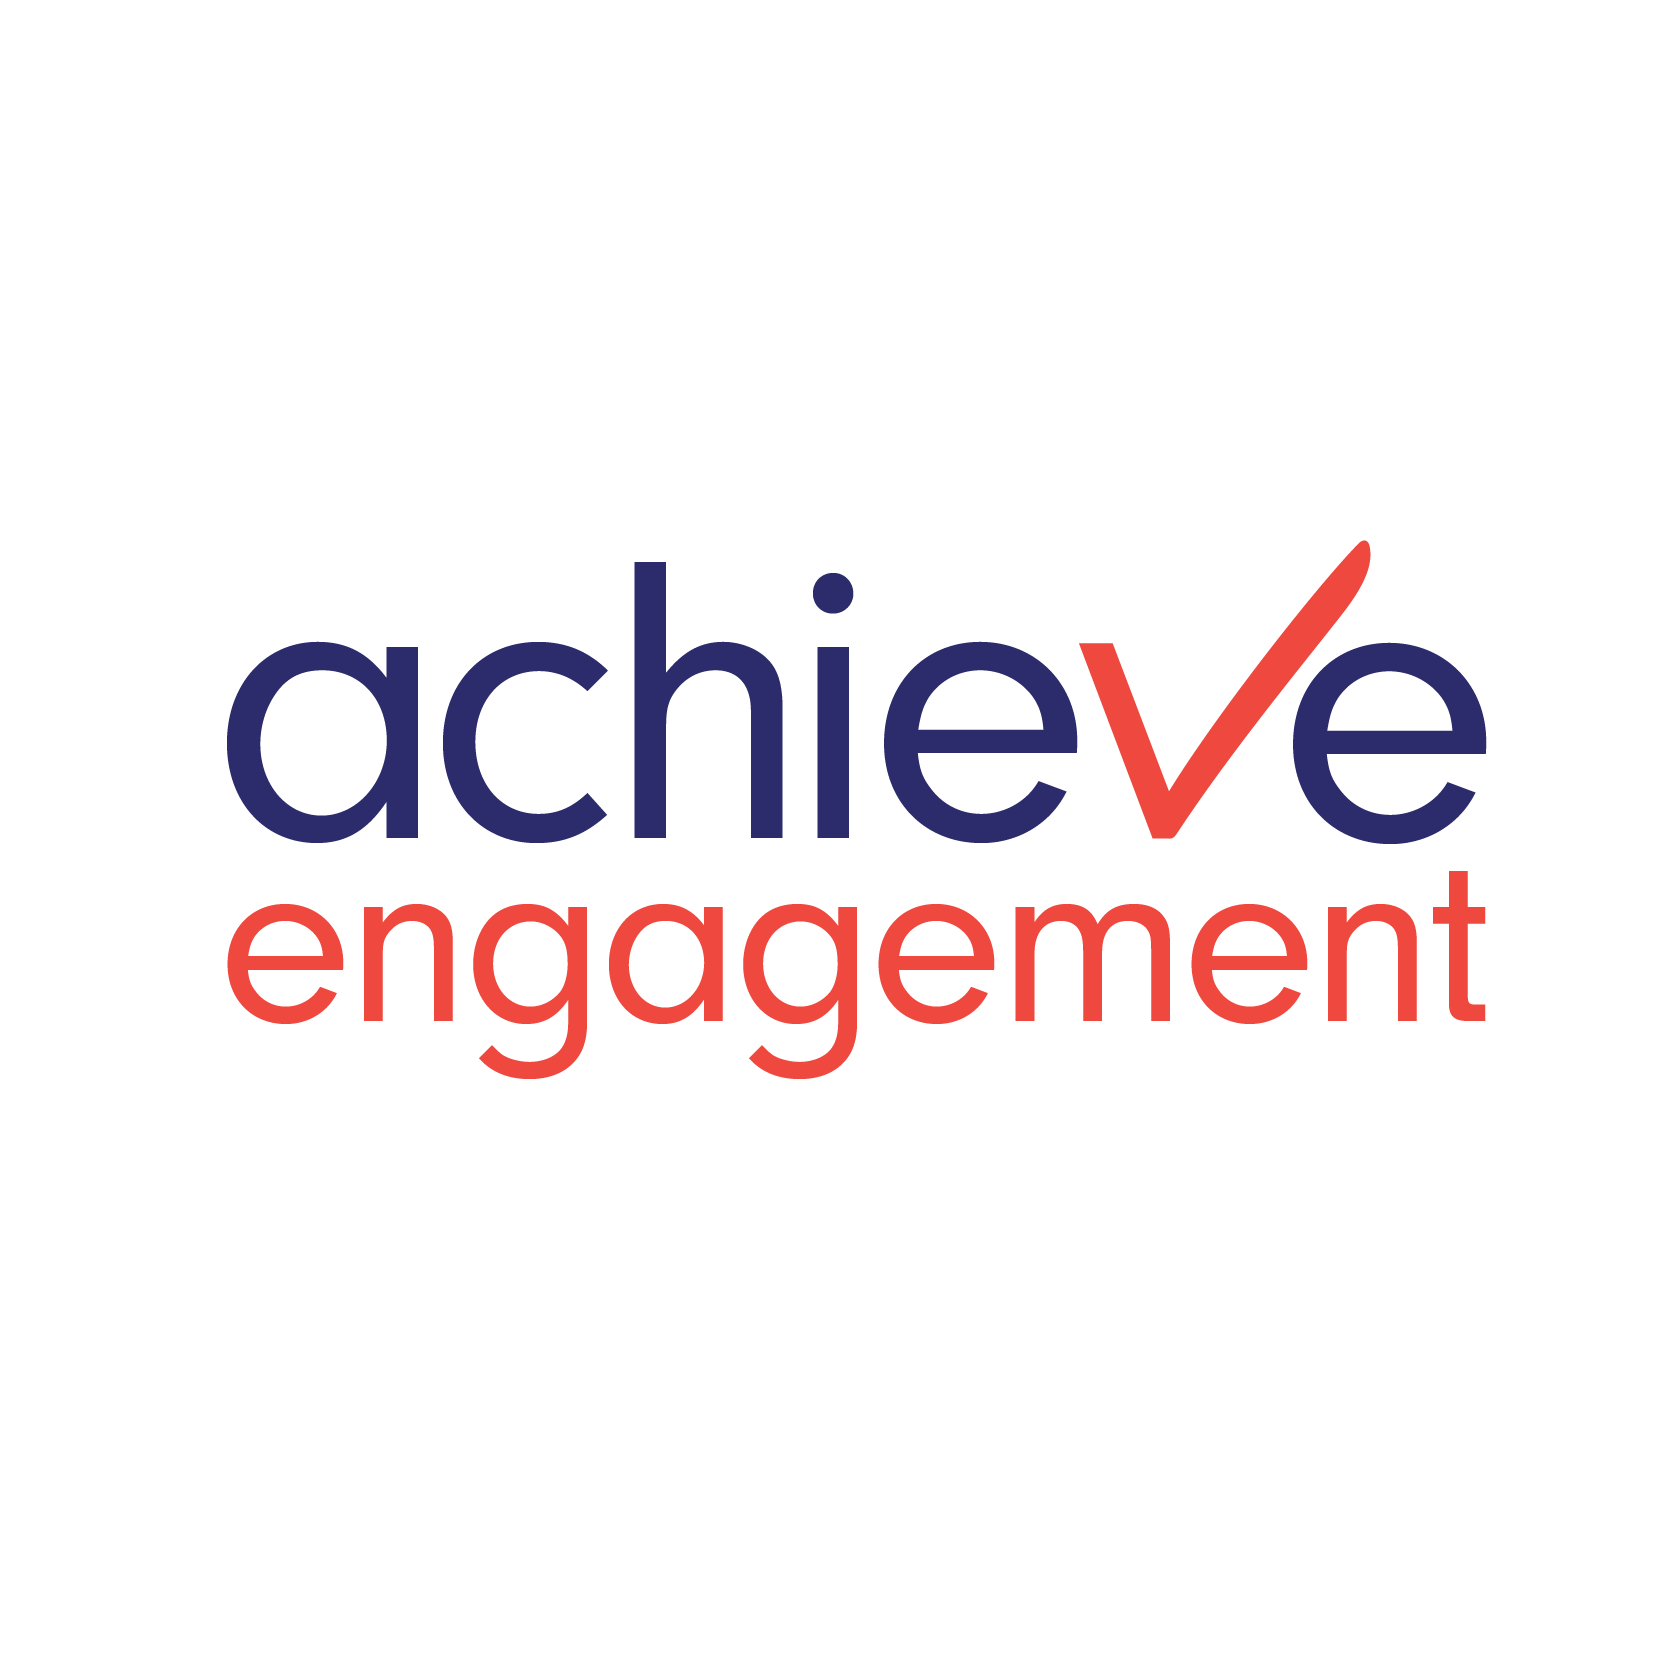 Achieve Engagement